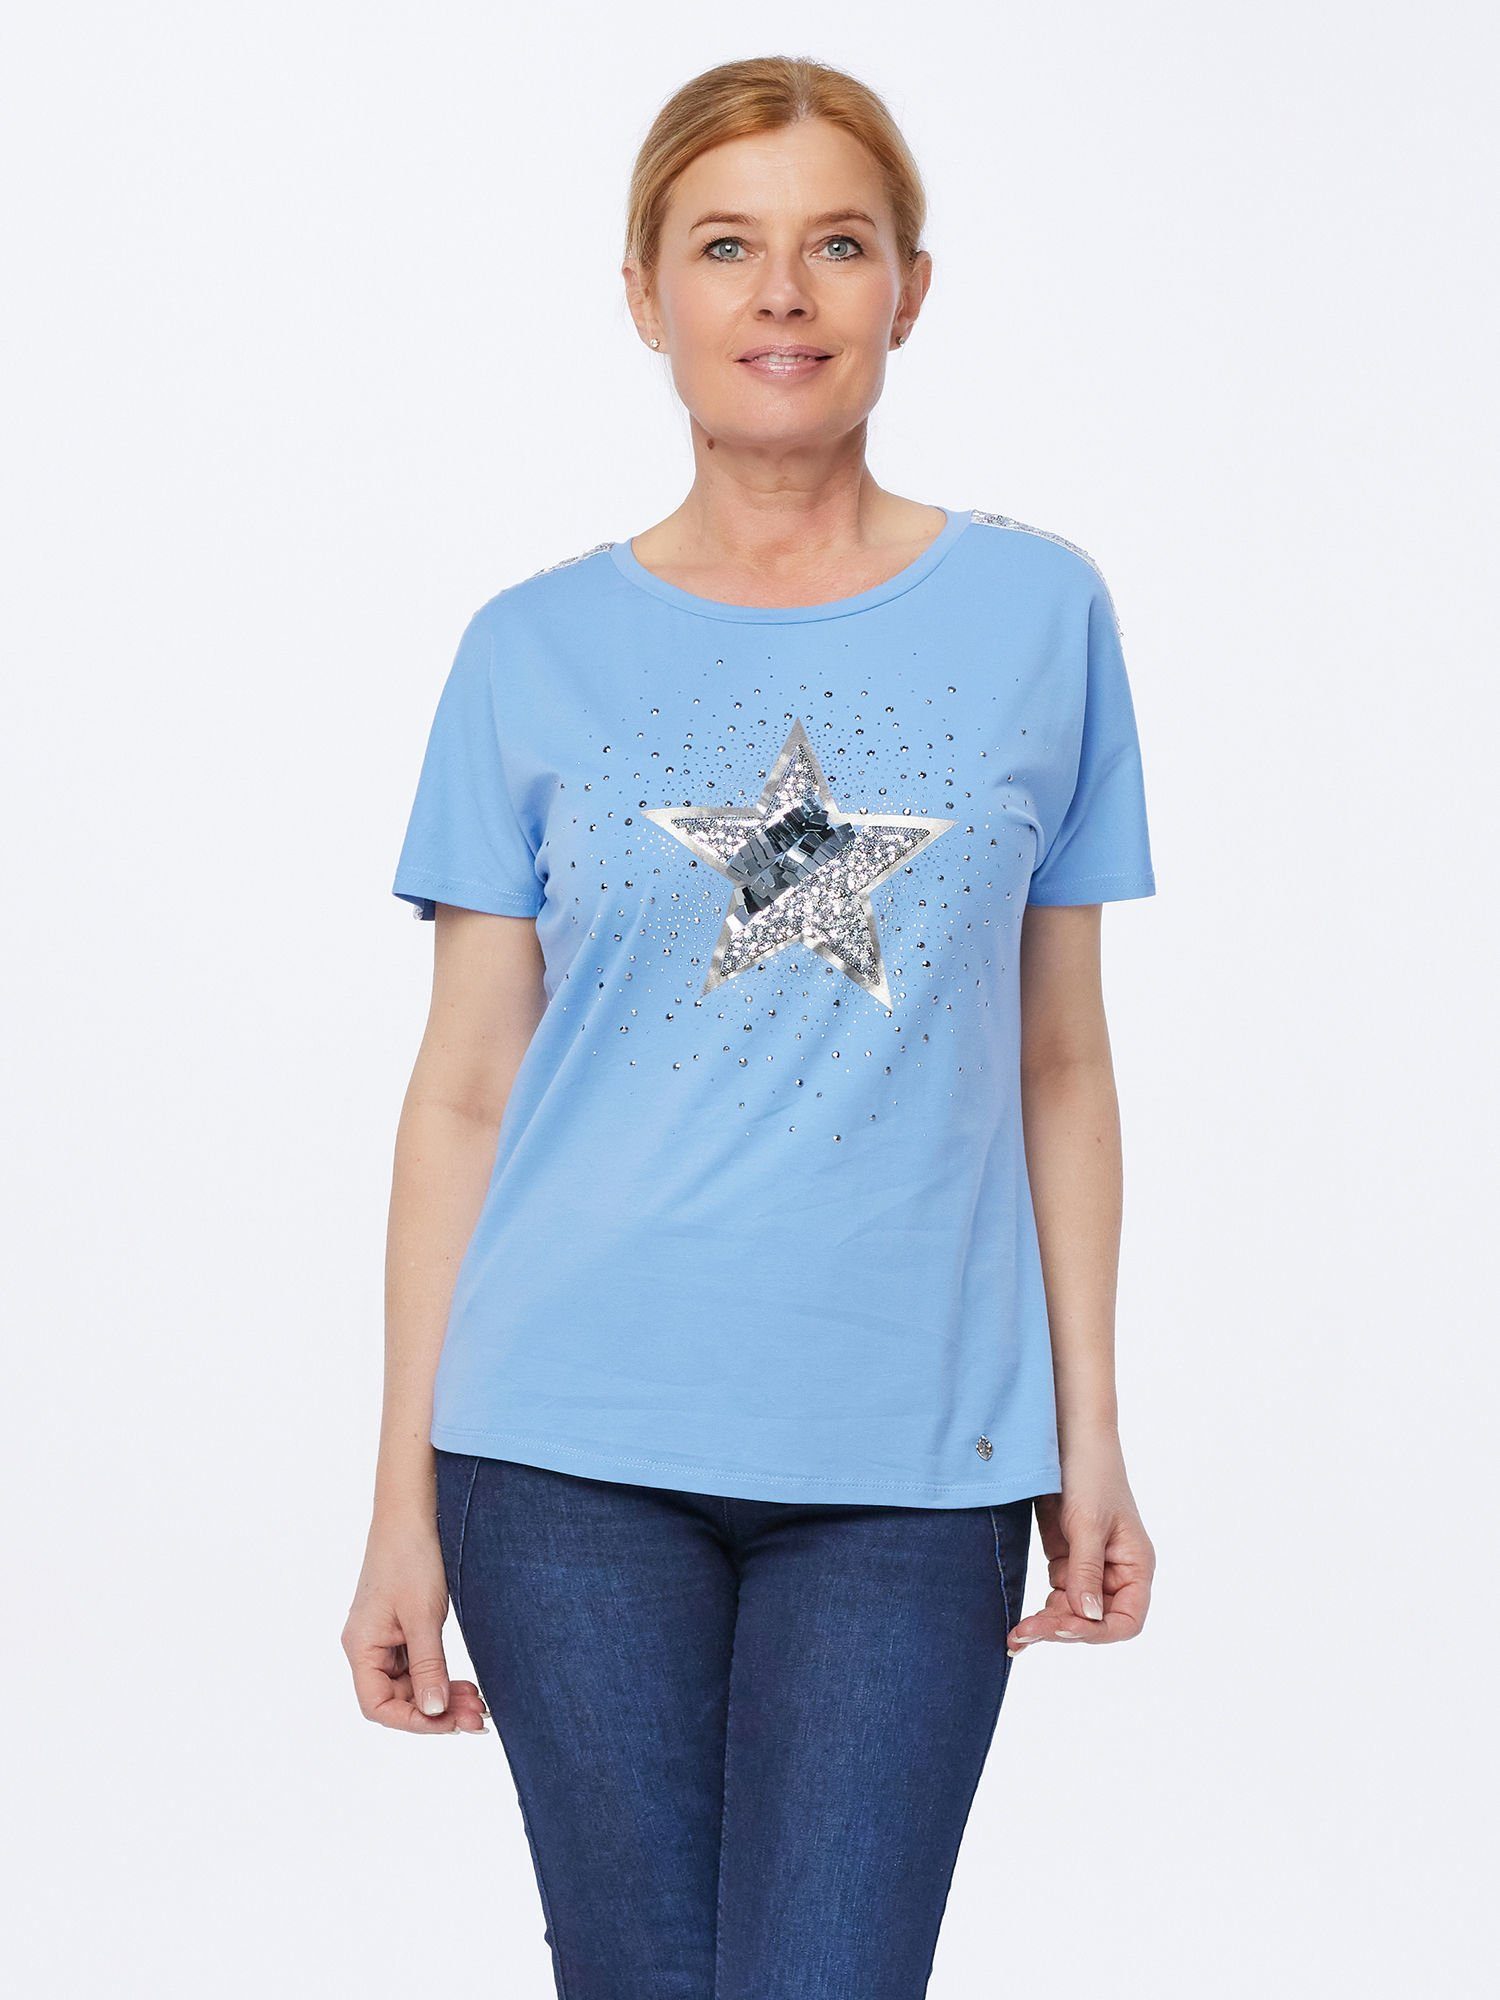 T-Shirt blau mit Christian Kurzarmbluse Stern-Motiv Materne